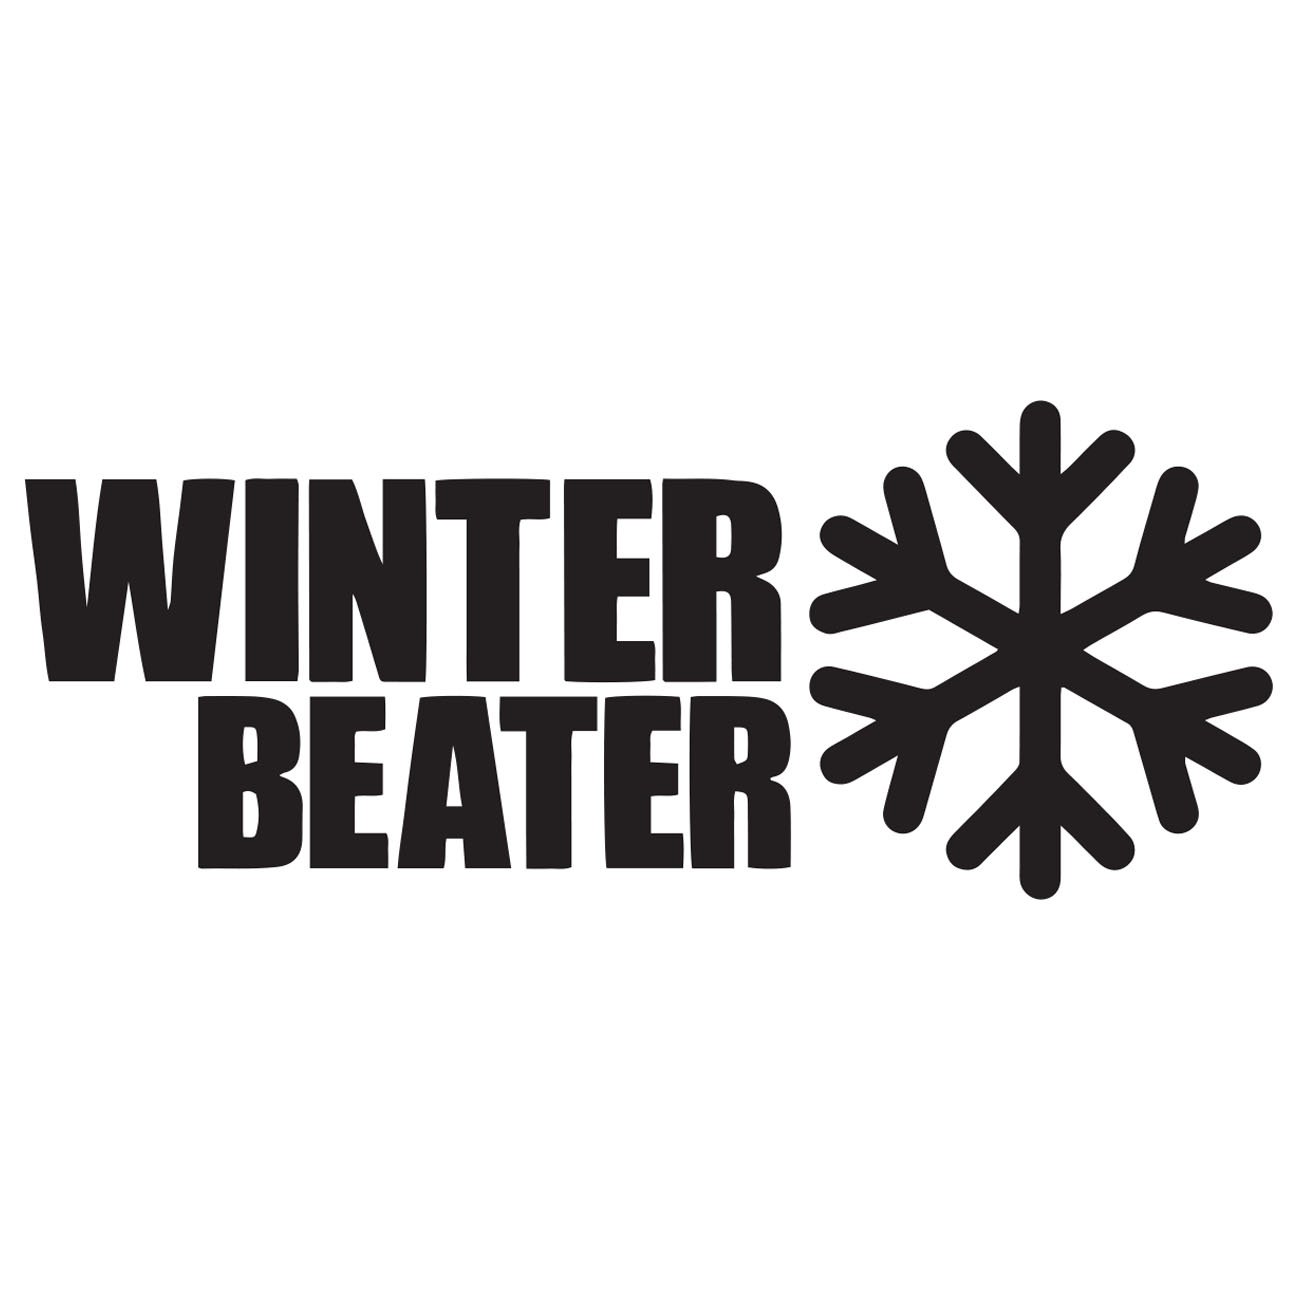 Winter beater